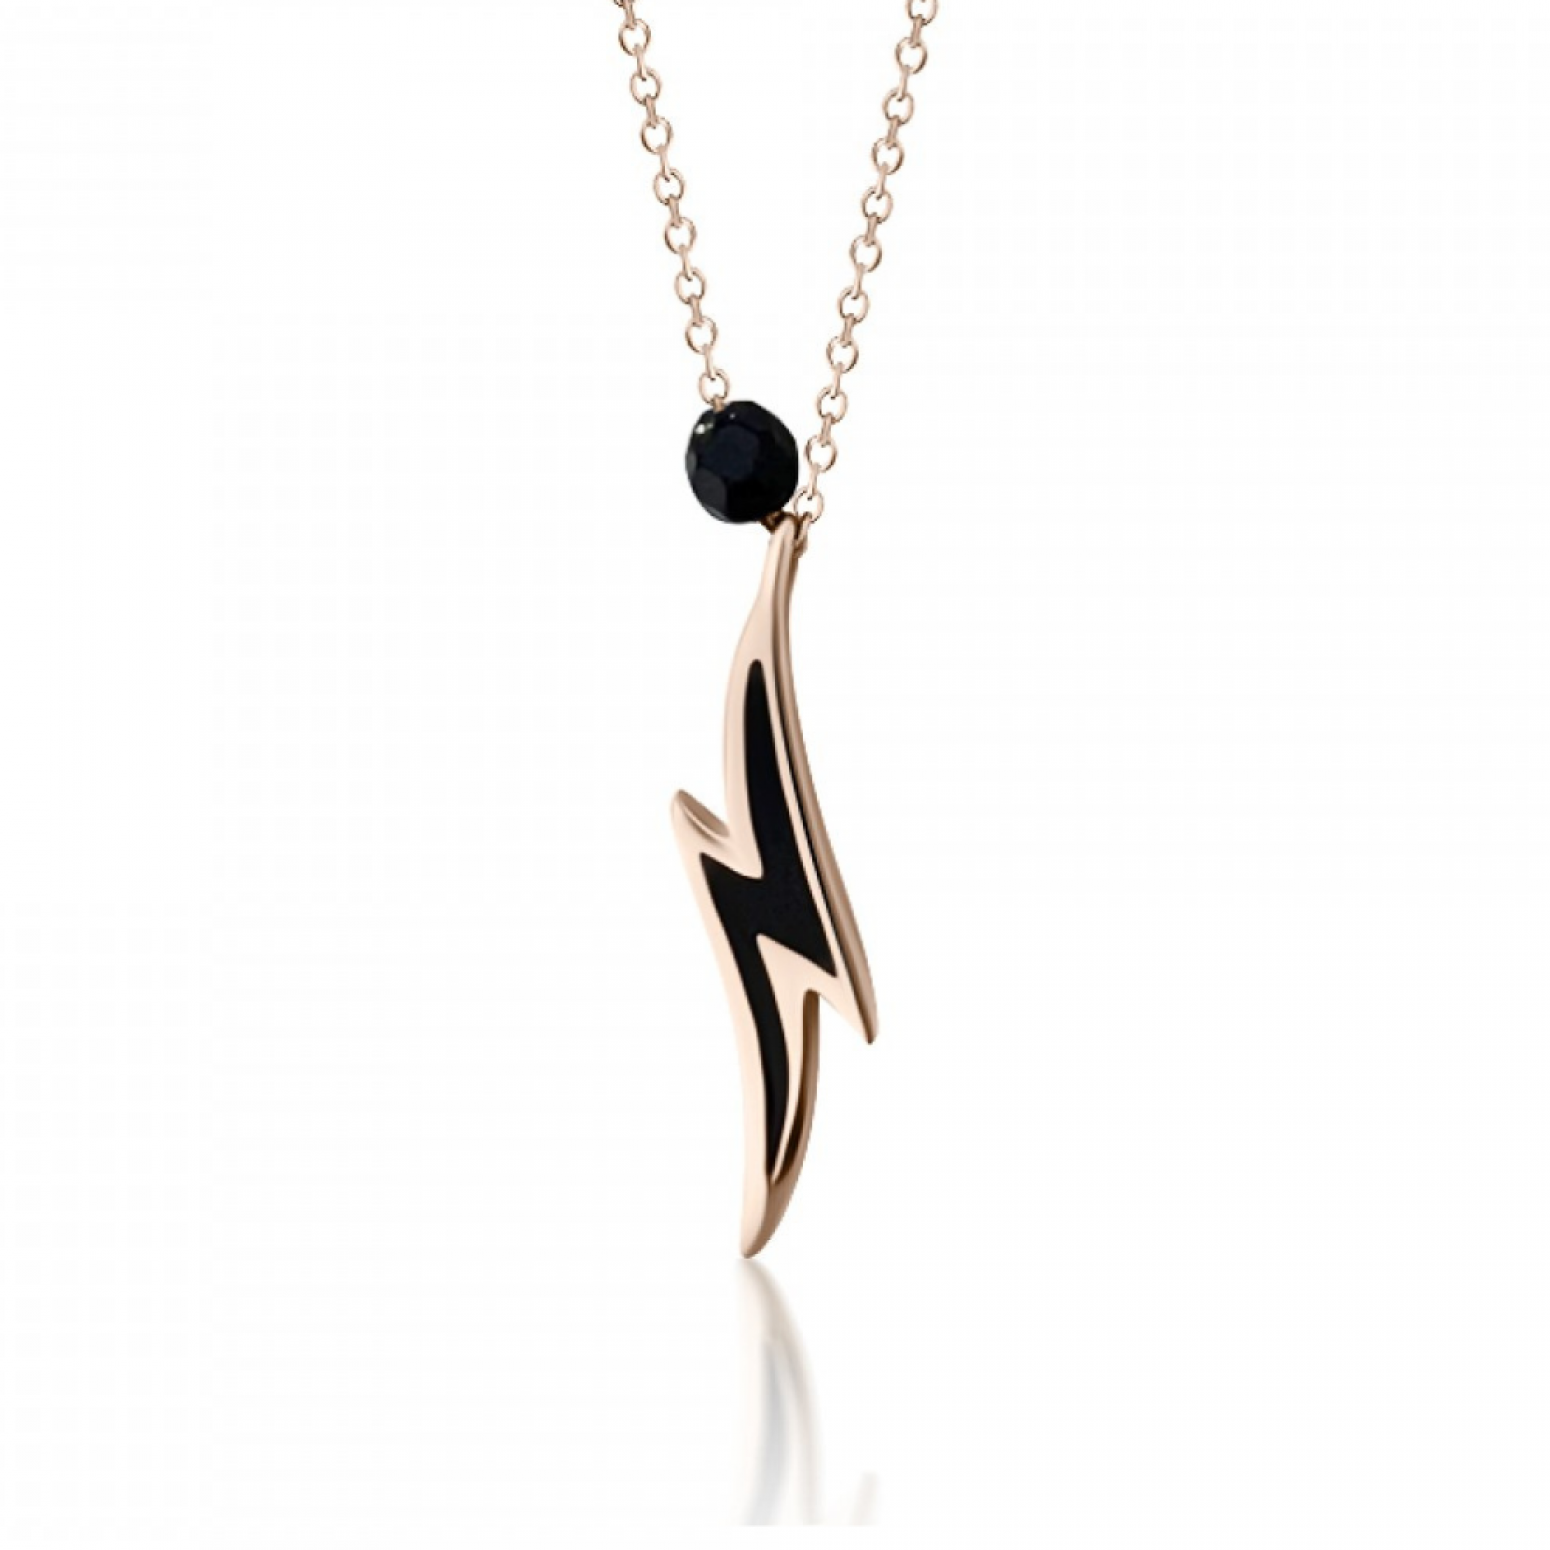 Lightning strike necklace, Κ9 pink gold with black zircon and enamel, ko5481 NECKLACES Κοσμηματα - chrilia.gr